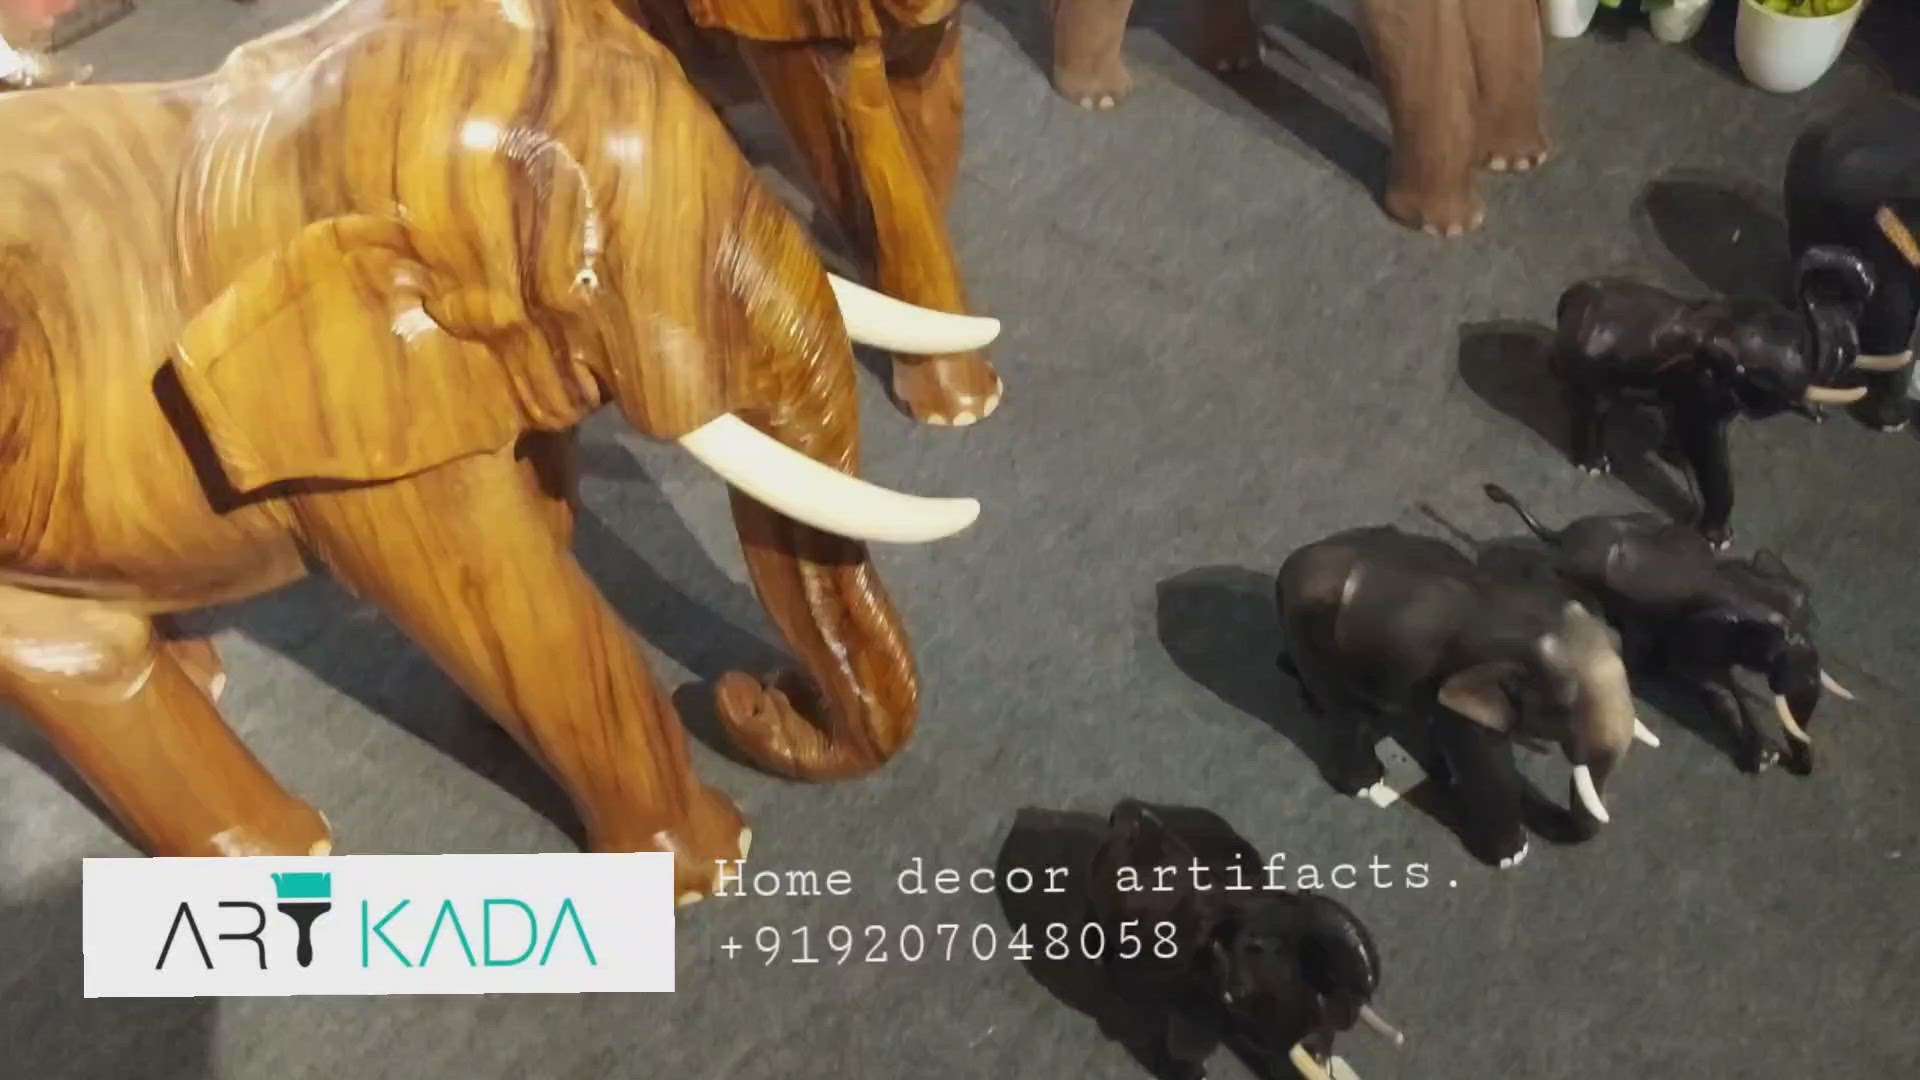 #HomeDecor  #interior  #interiordesign  #elephant  #statue  #newhomedesign  #decorative  #ideas  #artkada
9207048058.  9037048058 8113048058
artkadain@gmail.com
www.artkada.com